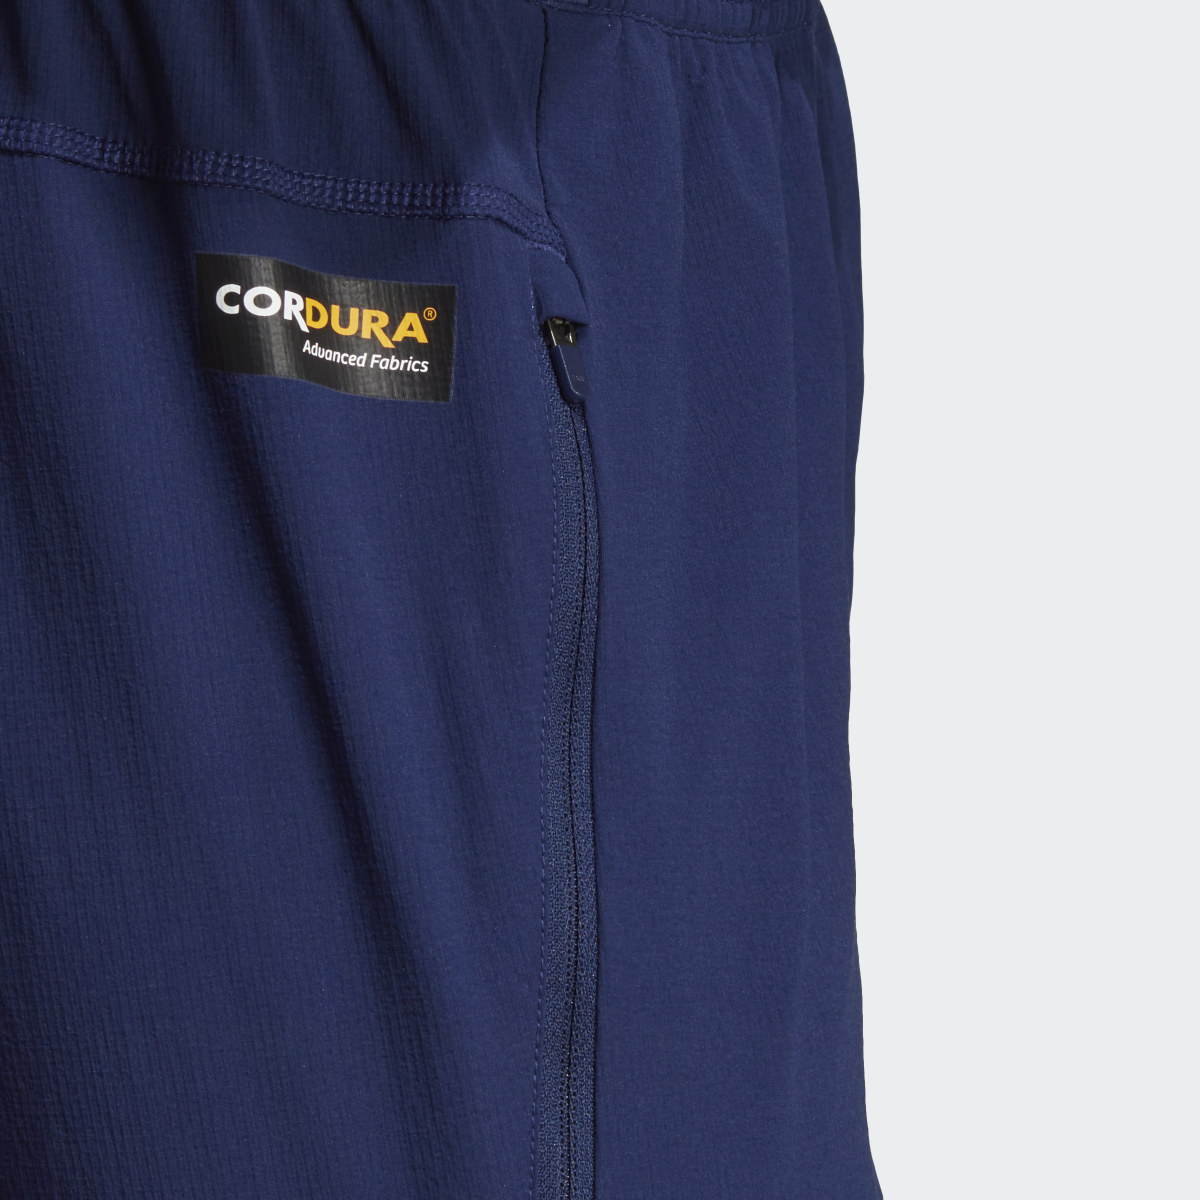 Adidas Designed for Training CORDURA® Workout Pants. 6